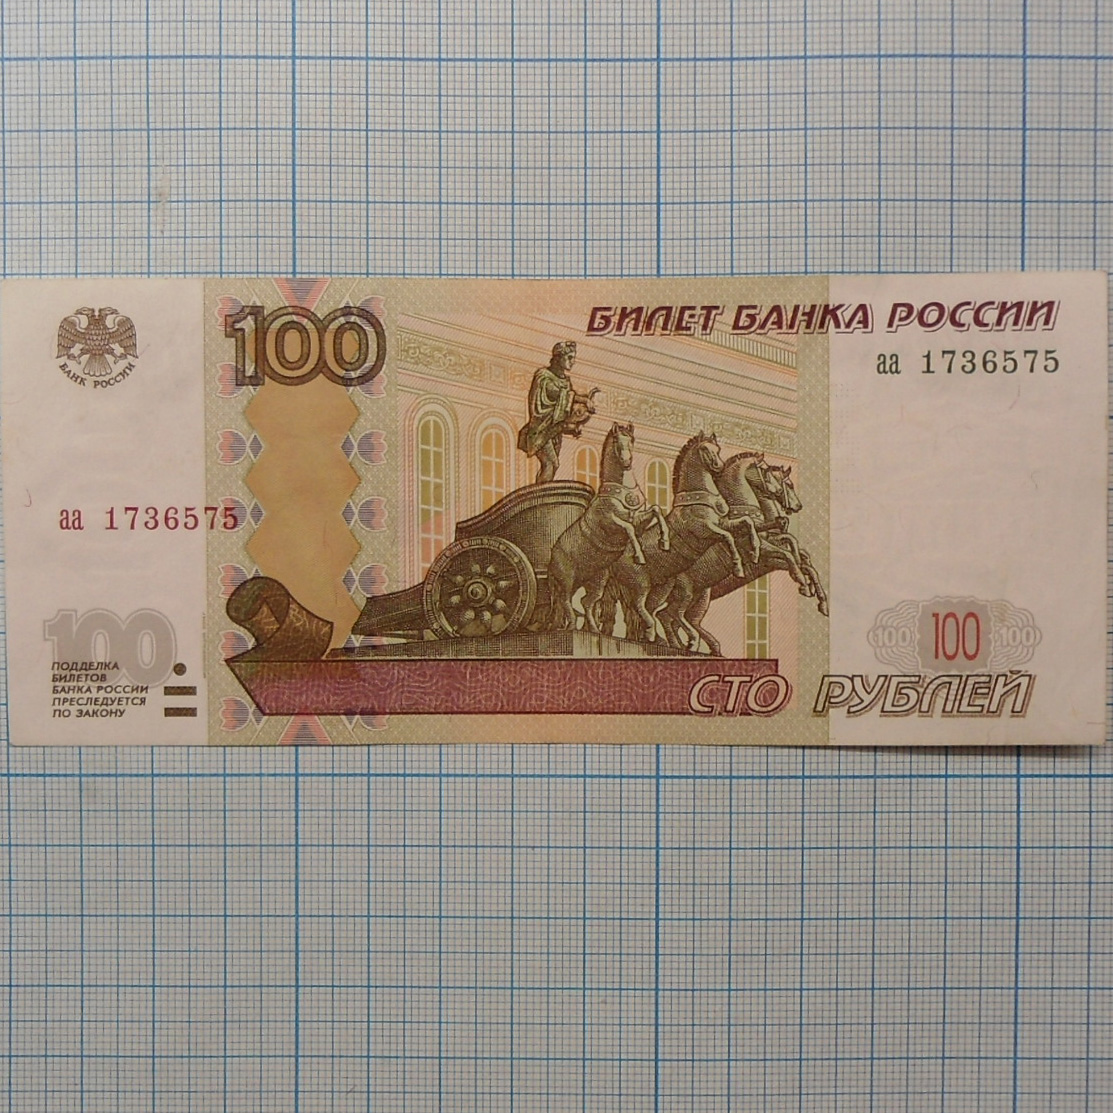 100 рублей на steam фото 70